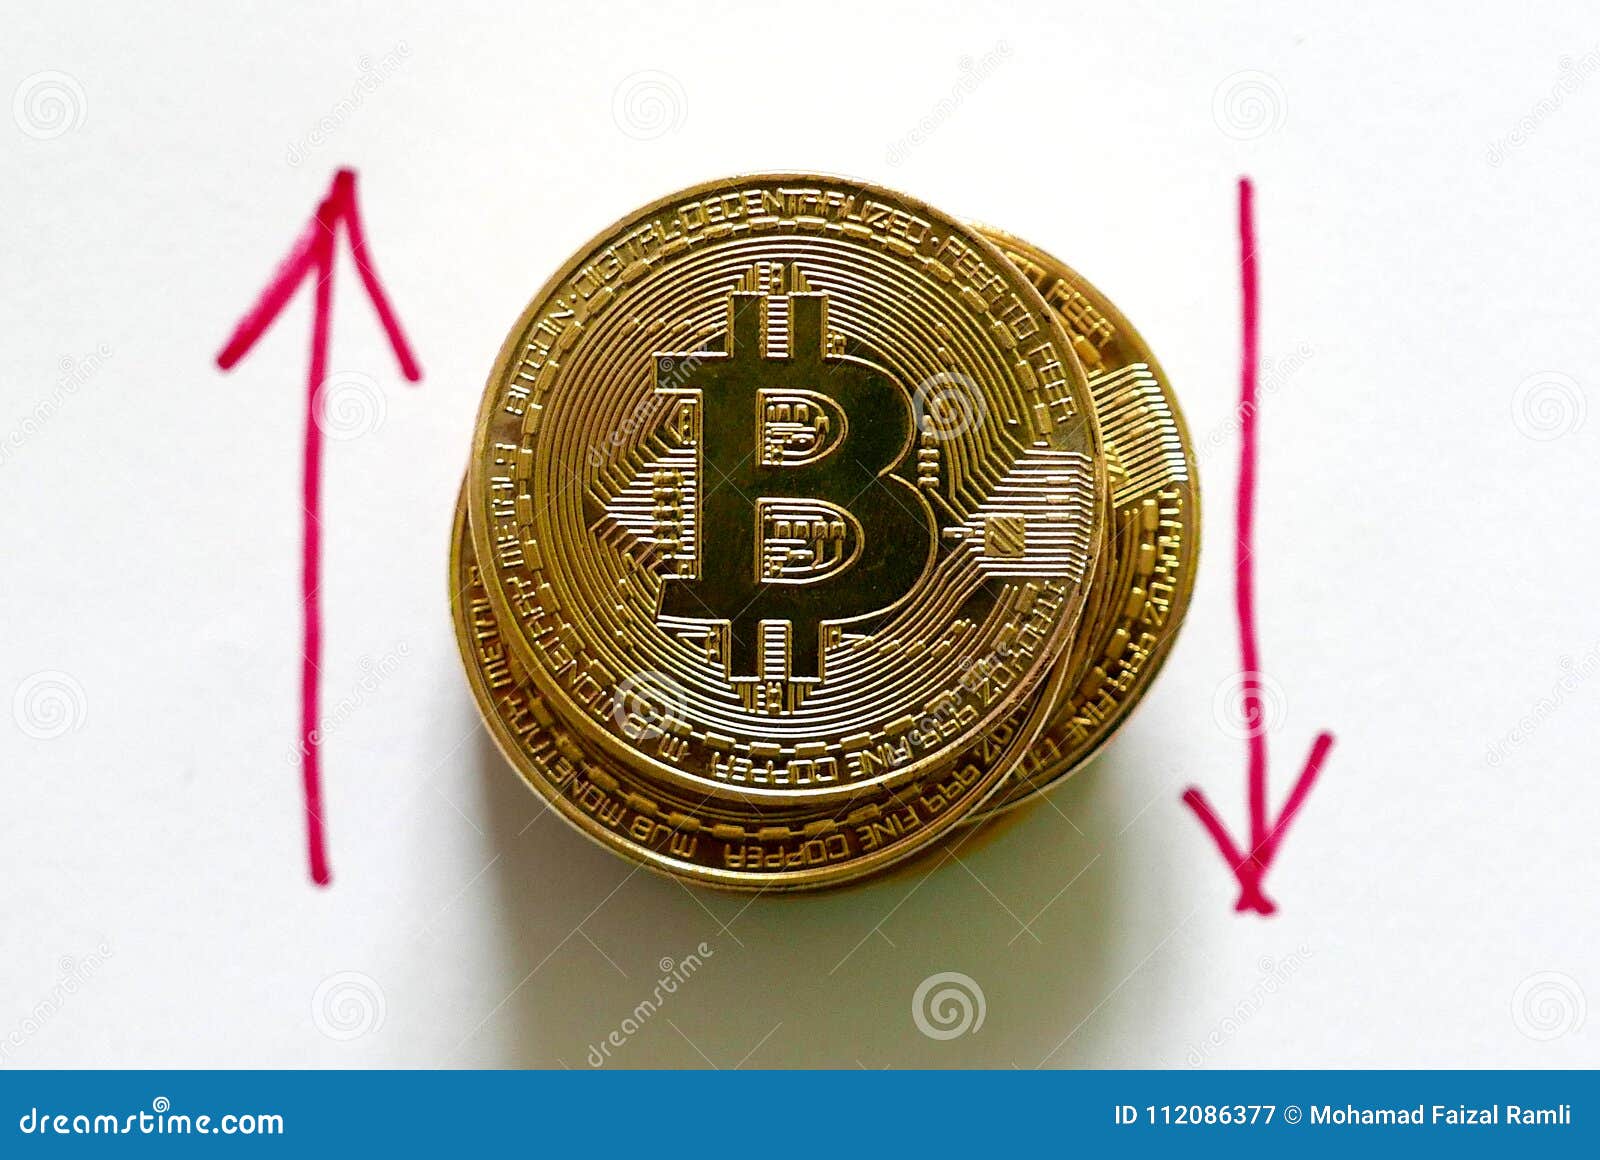 bitcoin replica bitcoin market australia